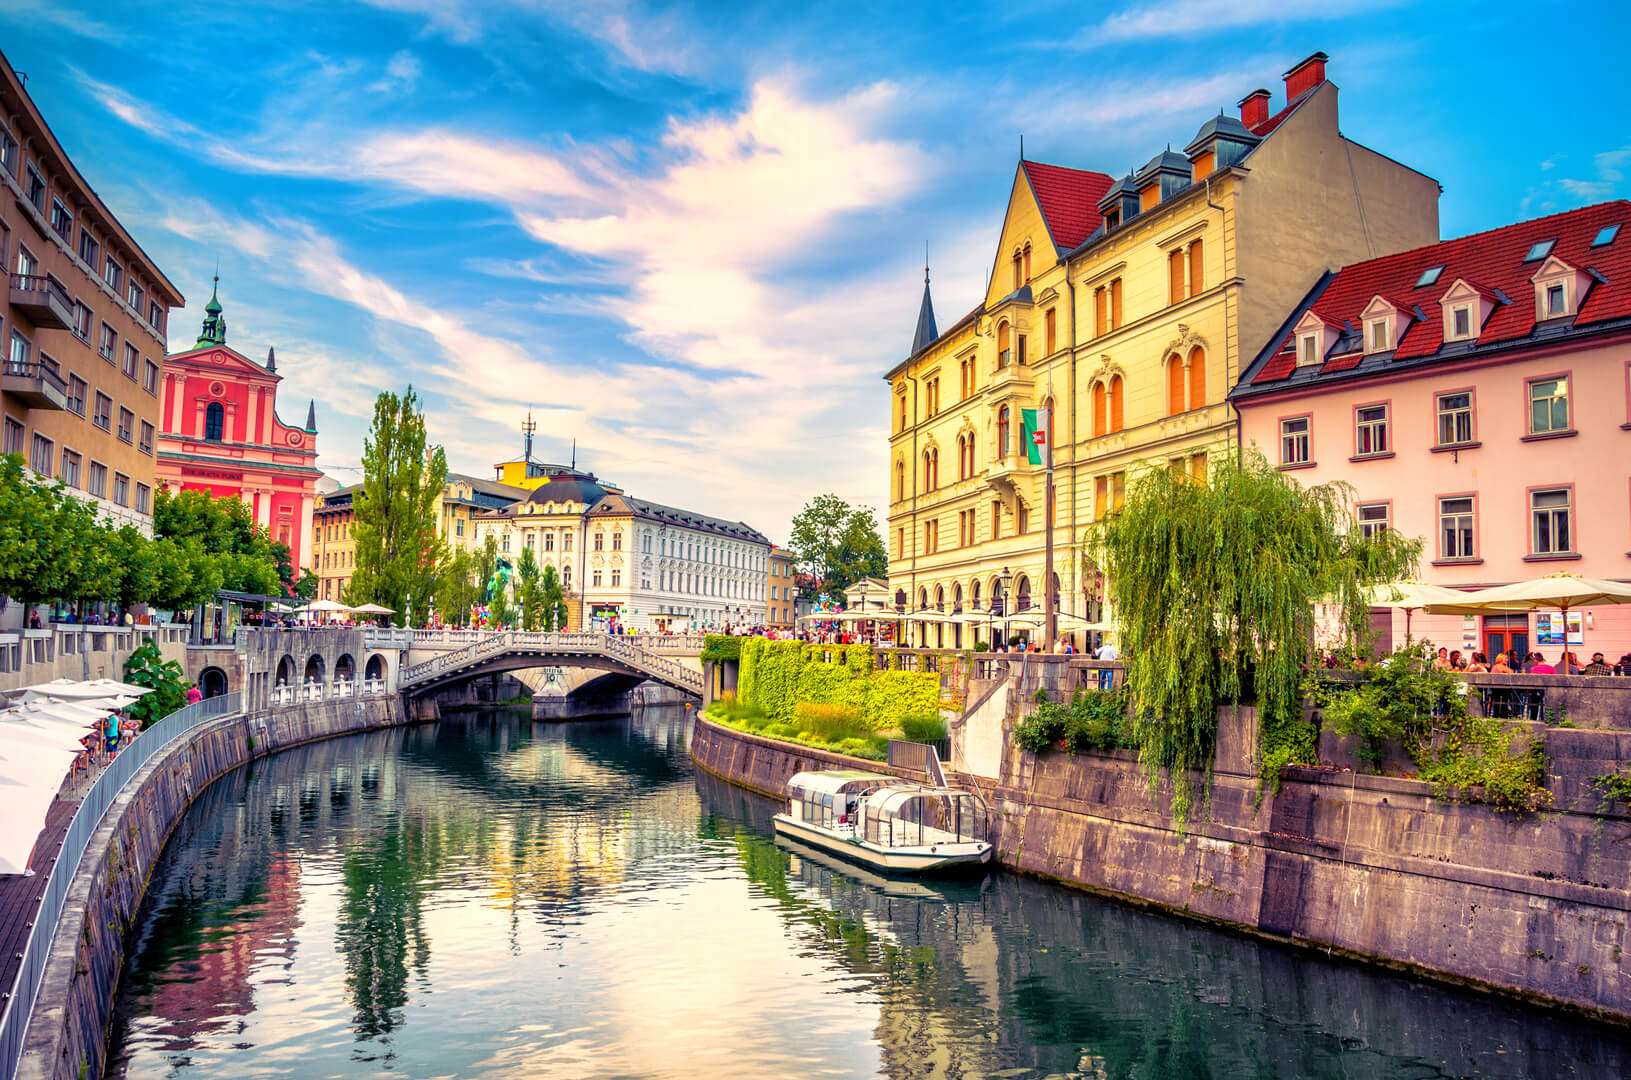 Stadtbild Blick auf Ljubljanica Fluss Kanal in Ljubljana Altstadt. Ljubljana ist ein berühmtes europäisches Touristenziel.